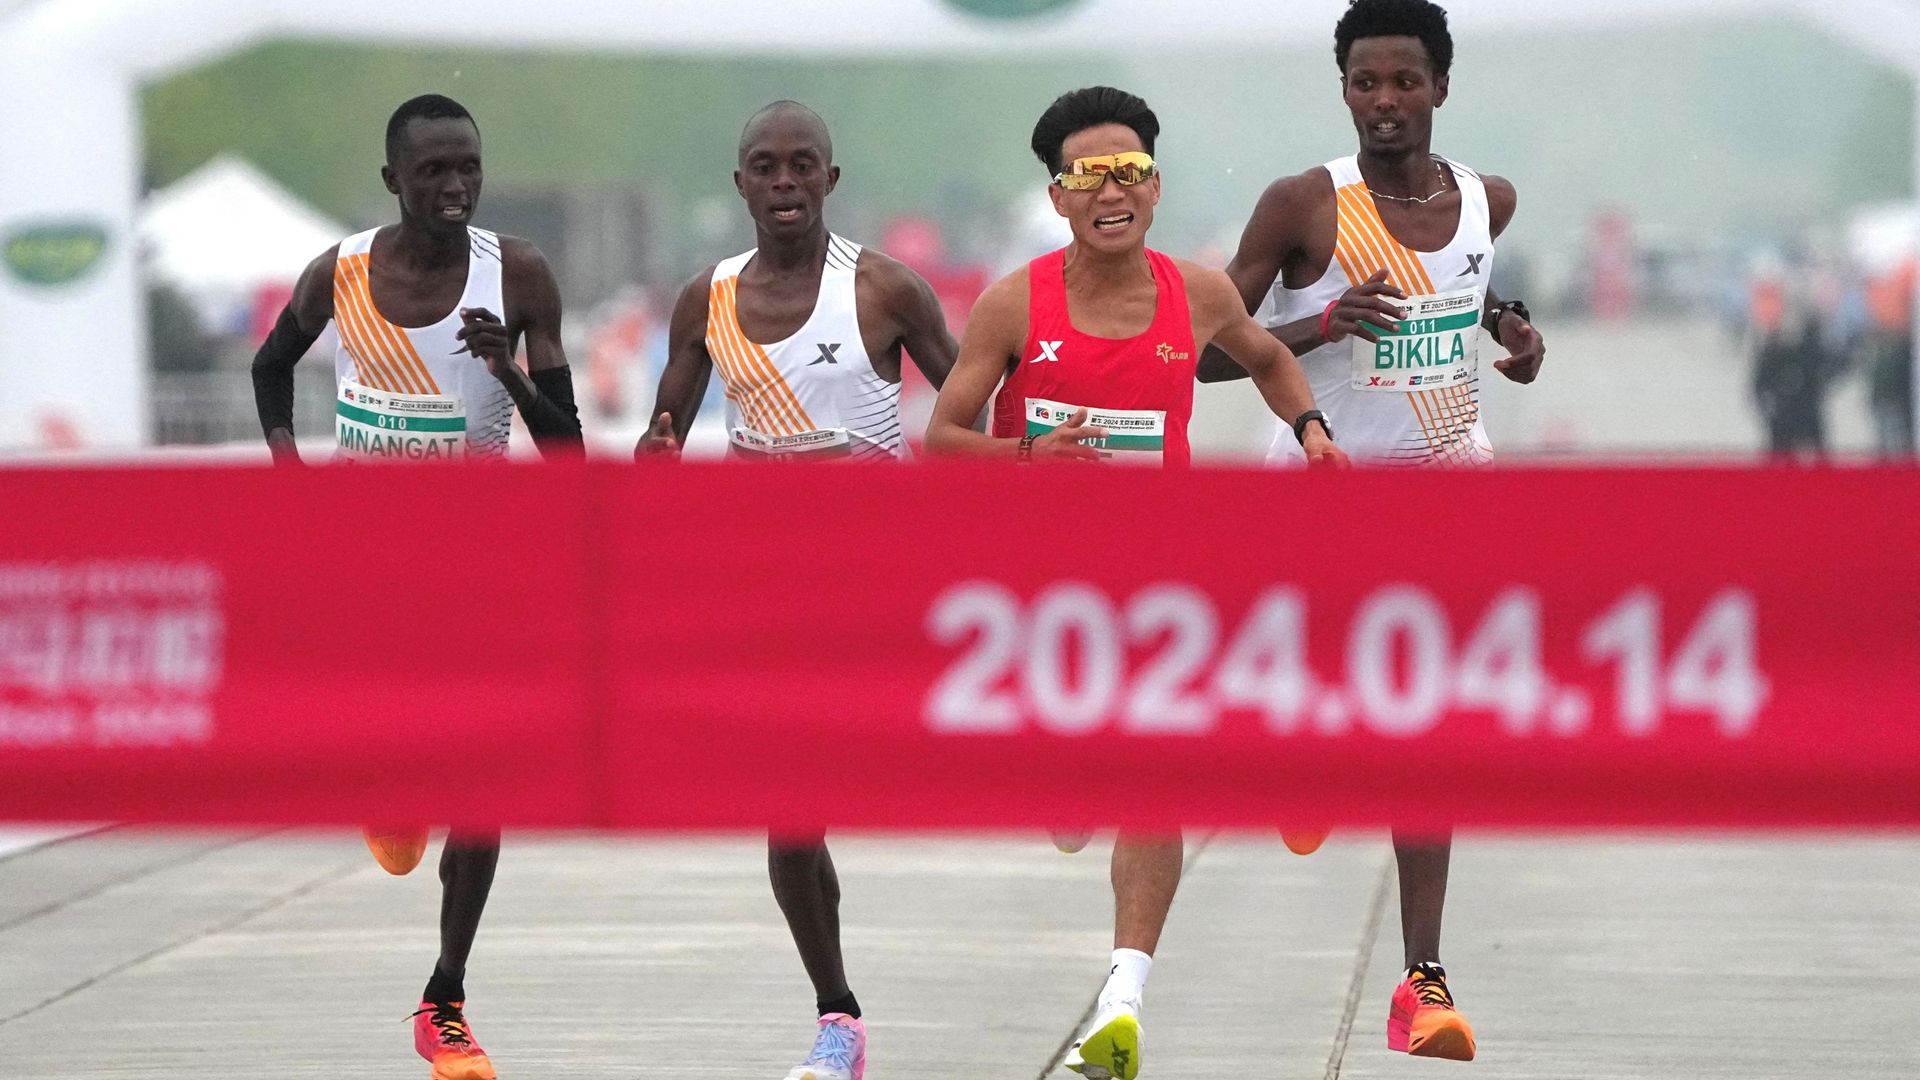 Beijing half marathon winner stripped of medal after runners slowed down for him